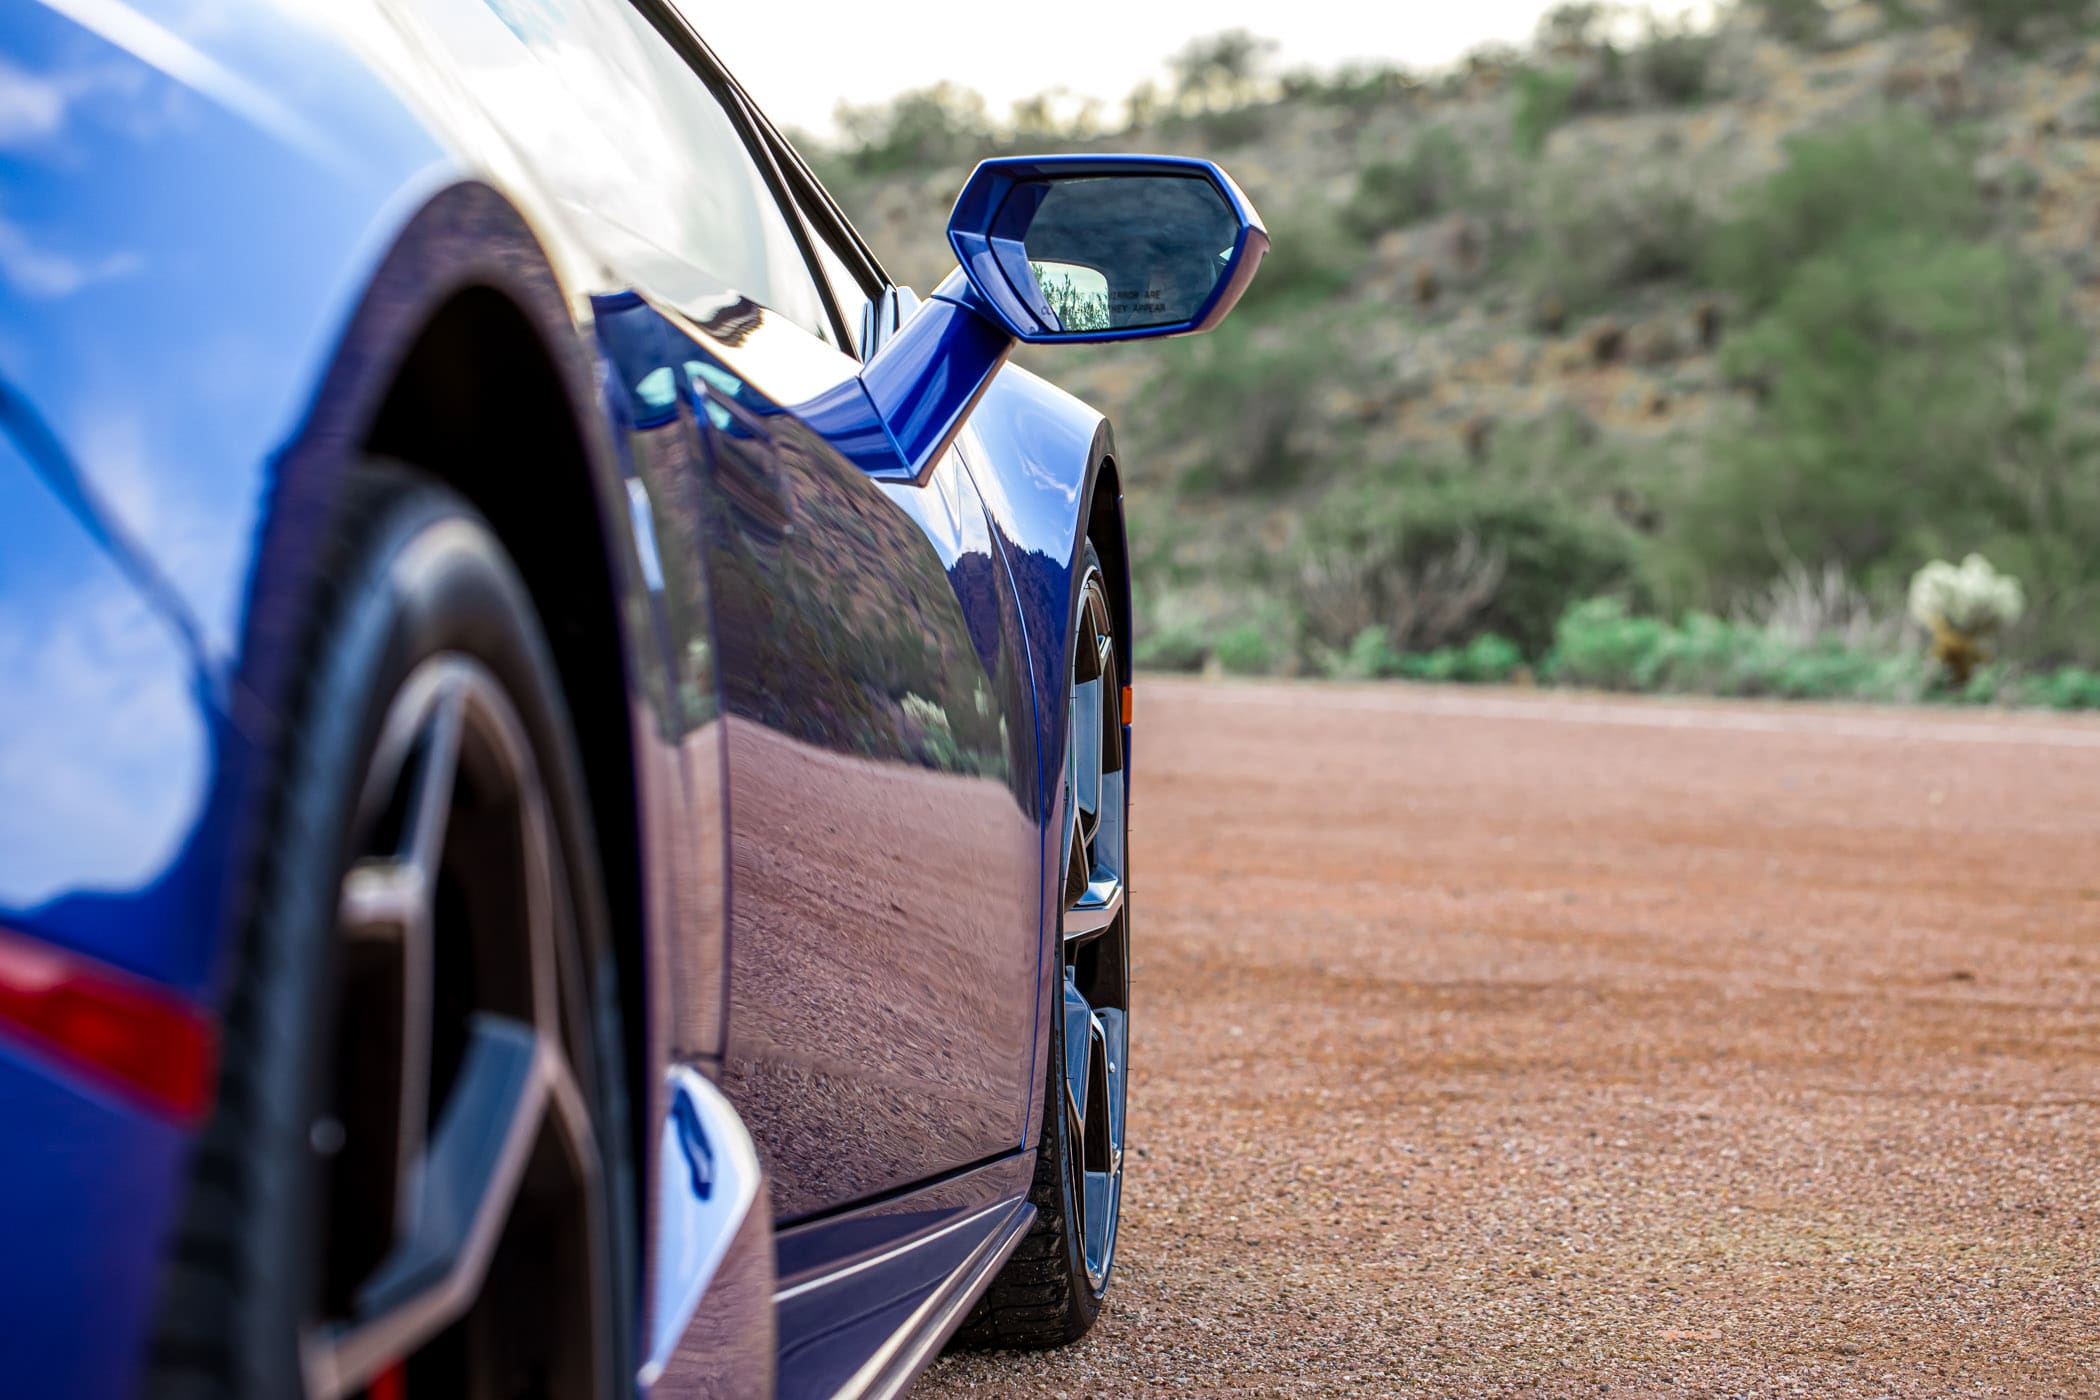 Lamborghini side panel and rear view mirror